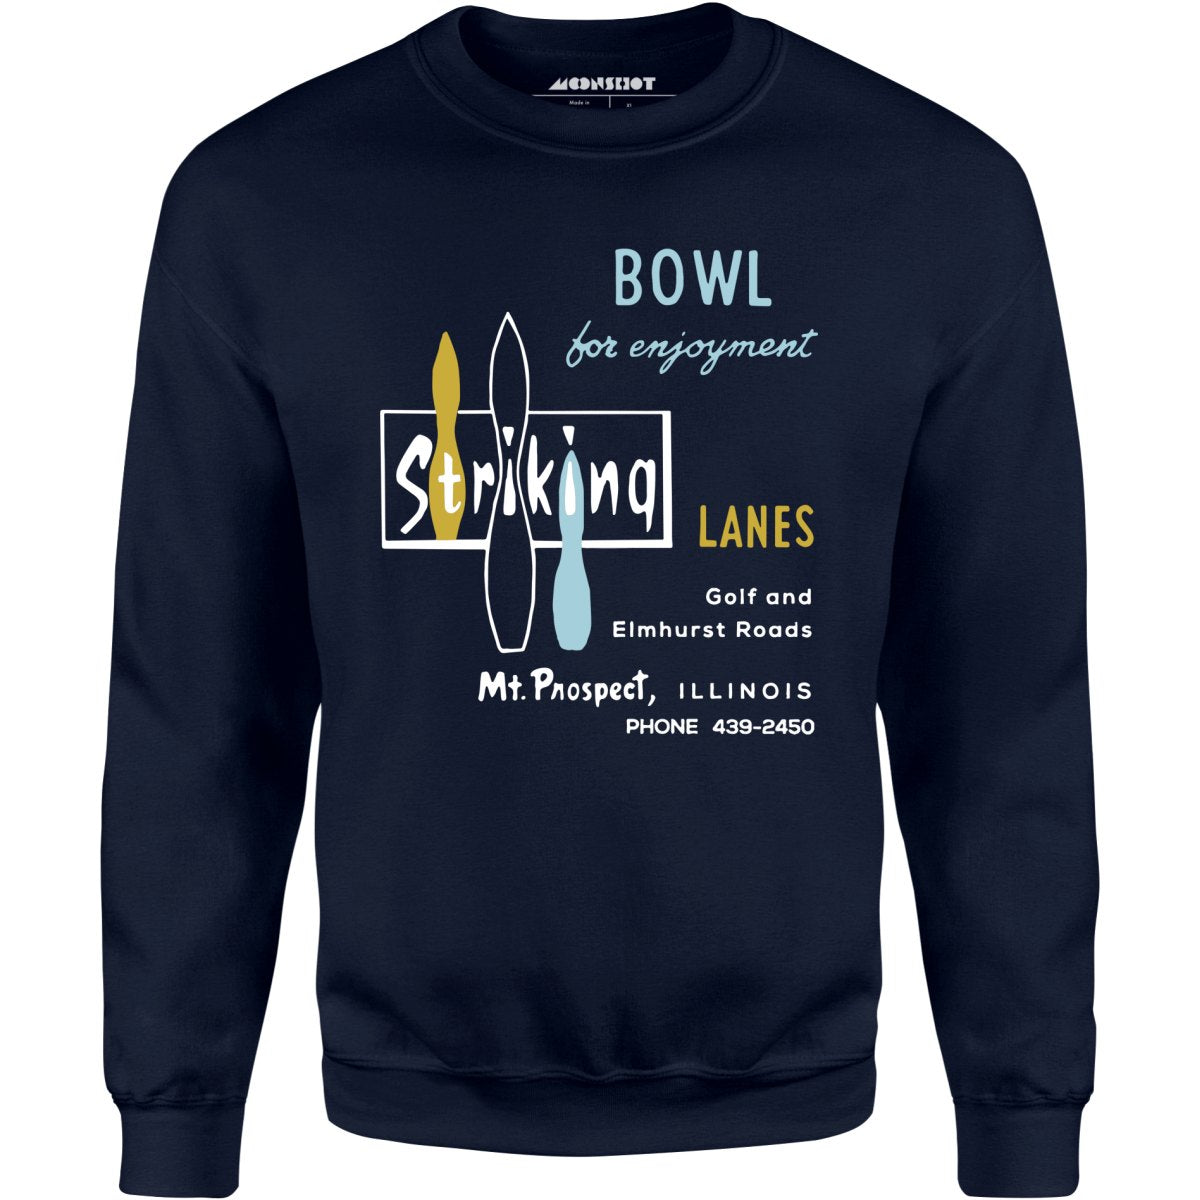 Striking Lanes - Mt. Prospect, IL - Vintage Bowling Alley - Unisex Sweatshirt